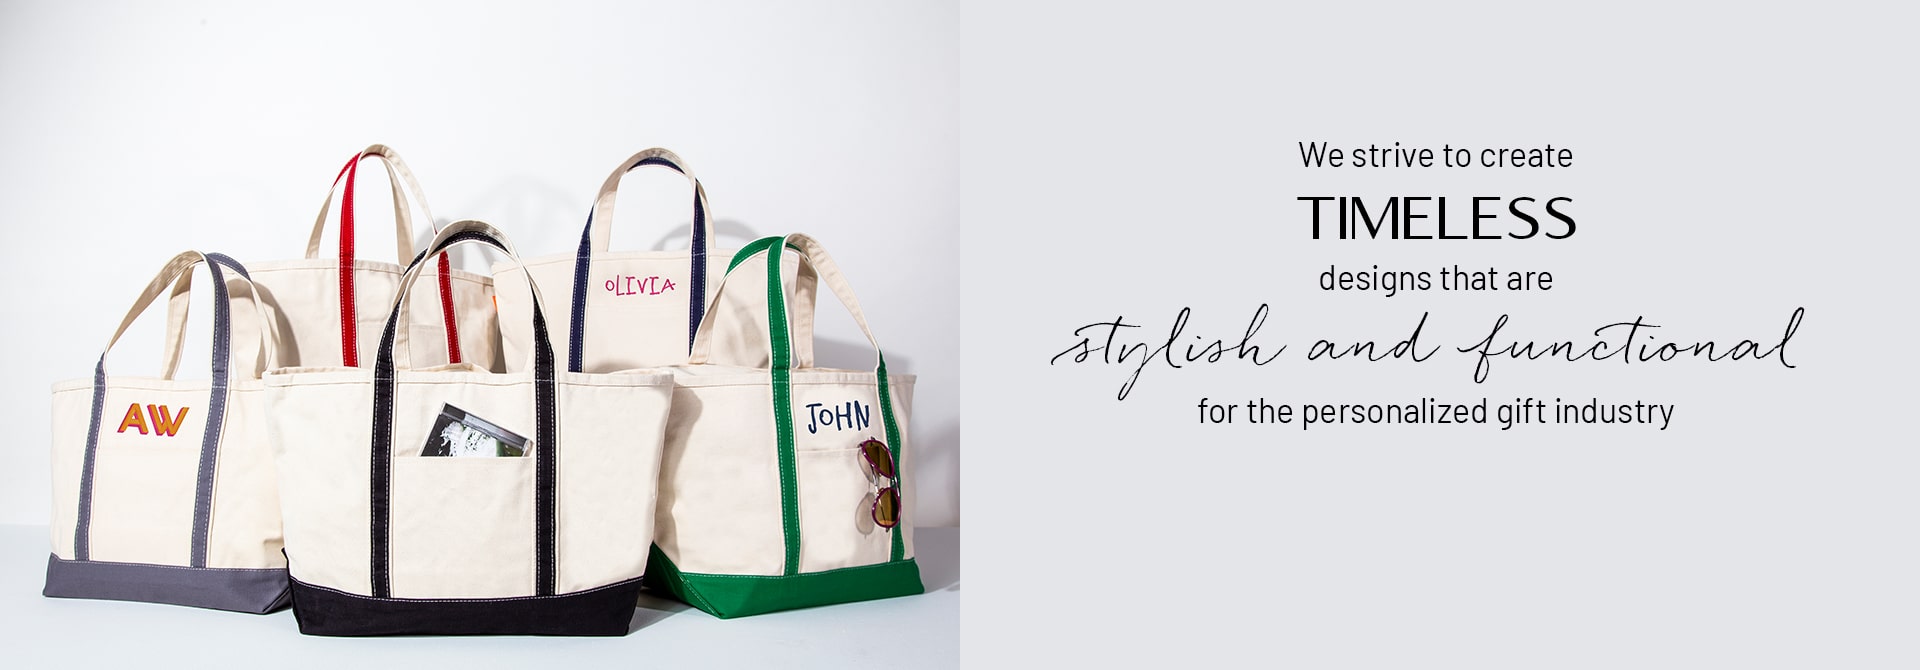 Canvas shoulder bag organization storage handbag cosmetics travel women's  bag retro fashion shopping bag canvas bag